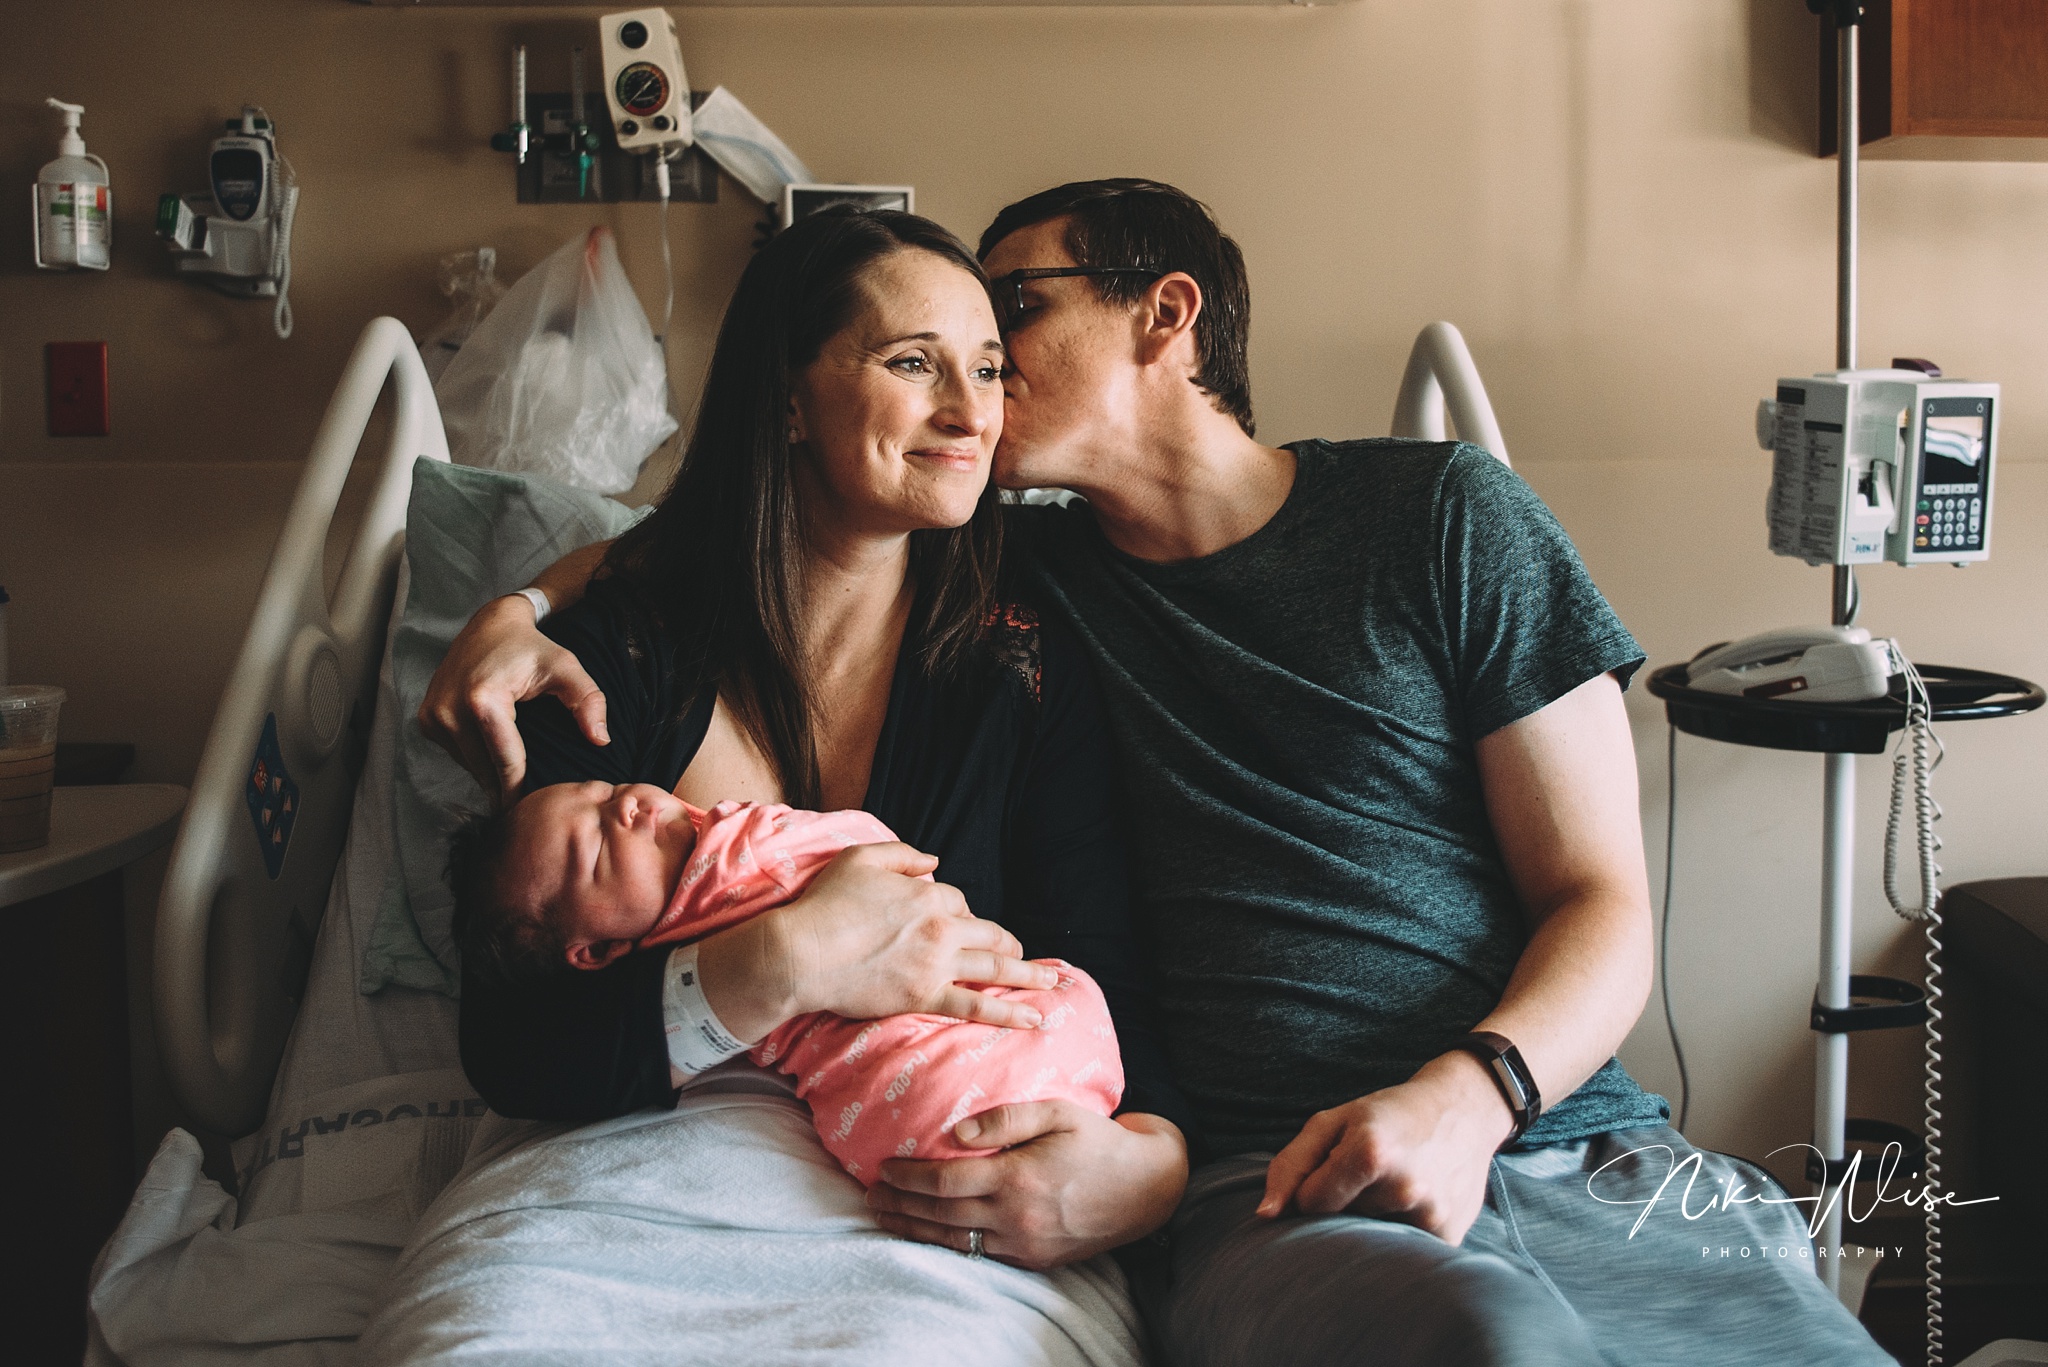 Baylor grapevine hospital newborn session